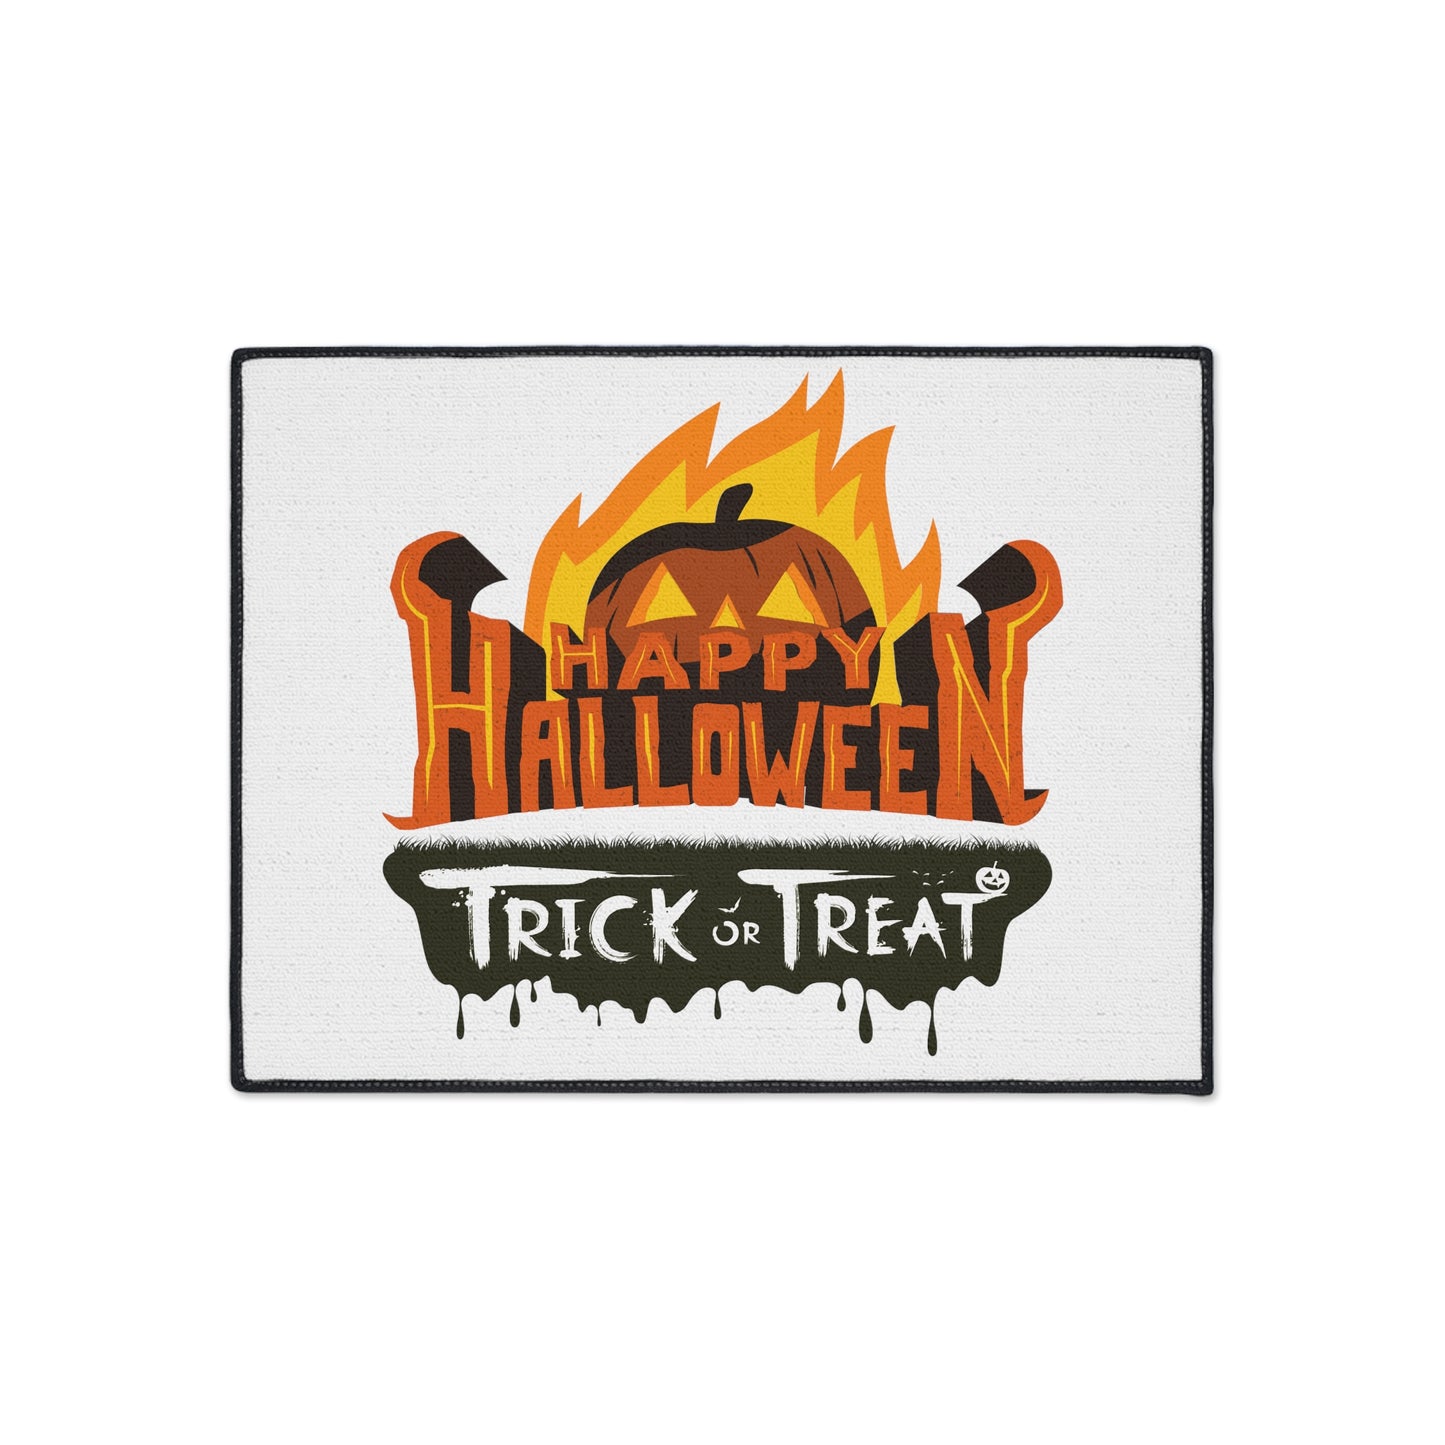 "Happy Halloween Trick or Treat" Heavy Duty Floor Mat, Non-Slip Backing, Black Trim